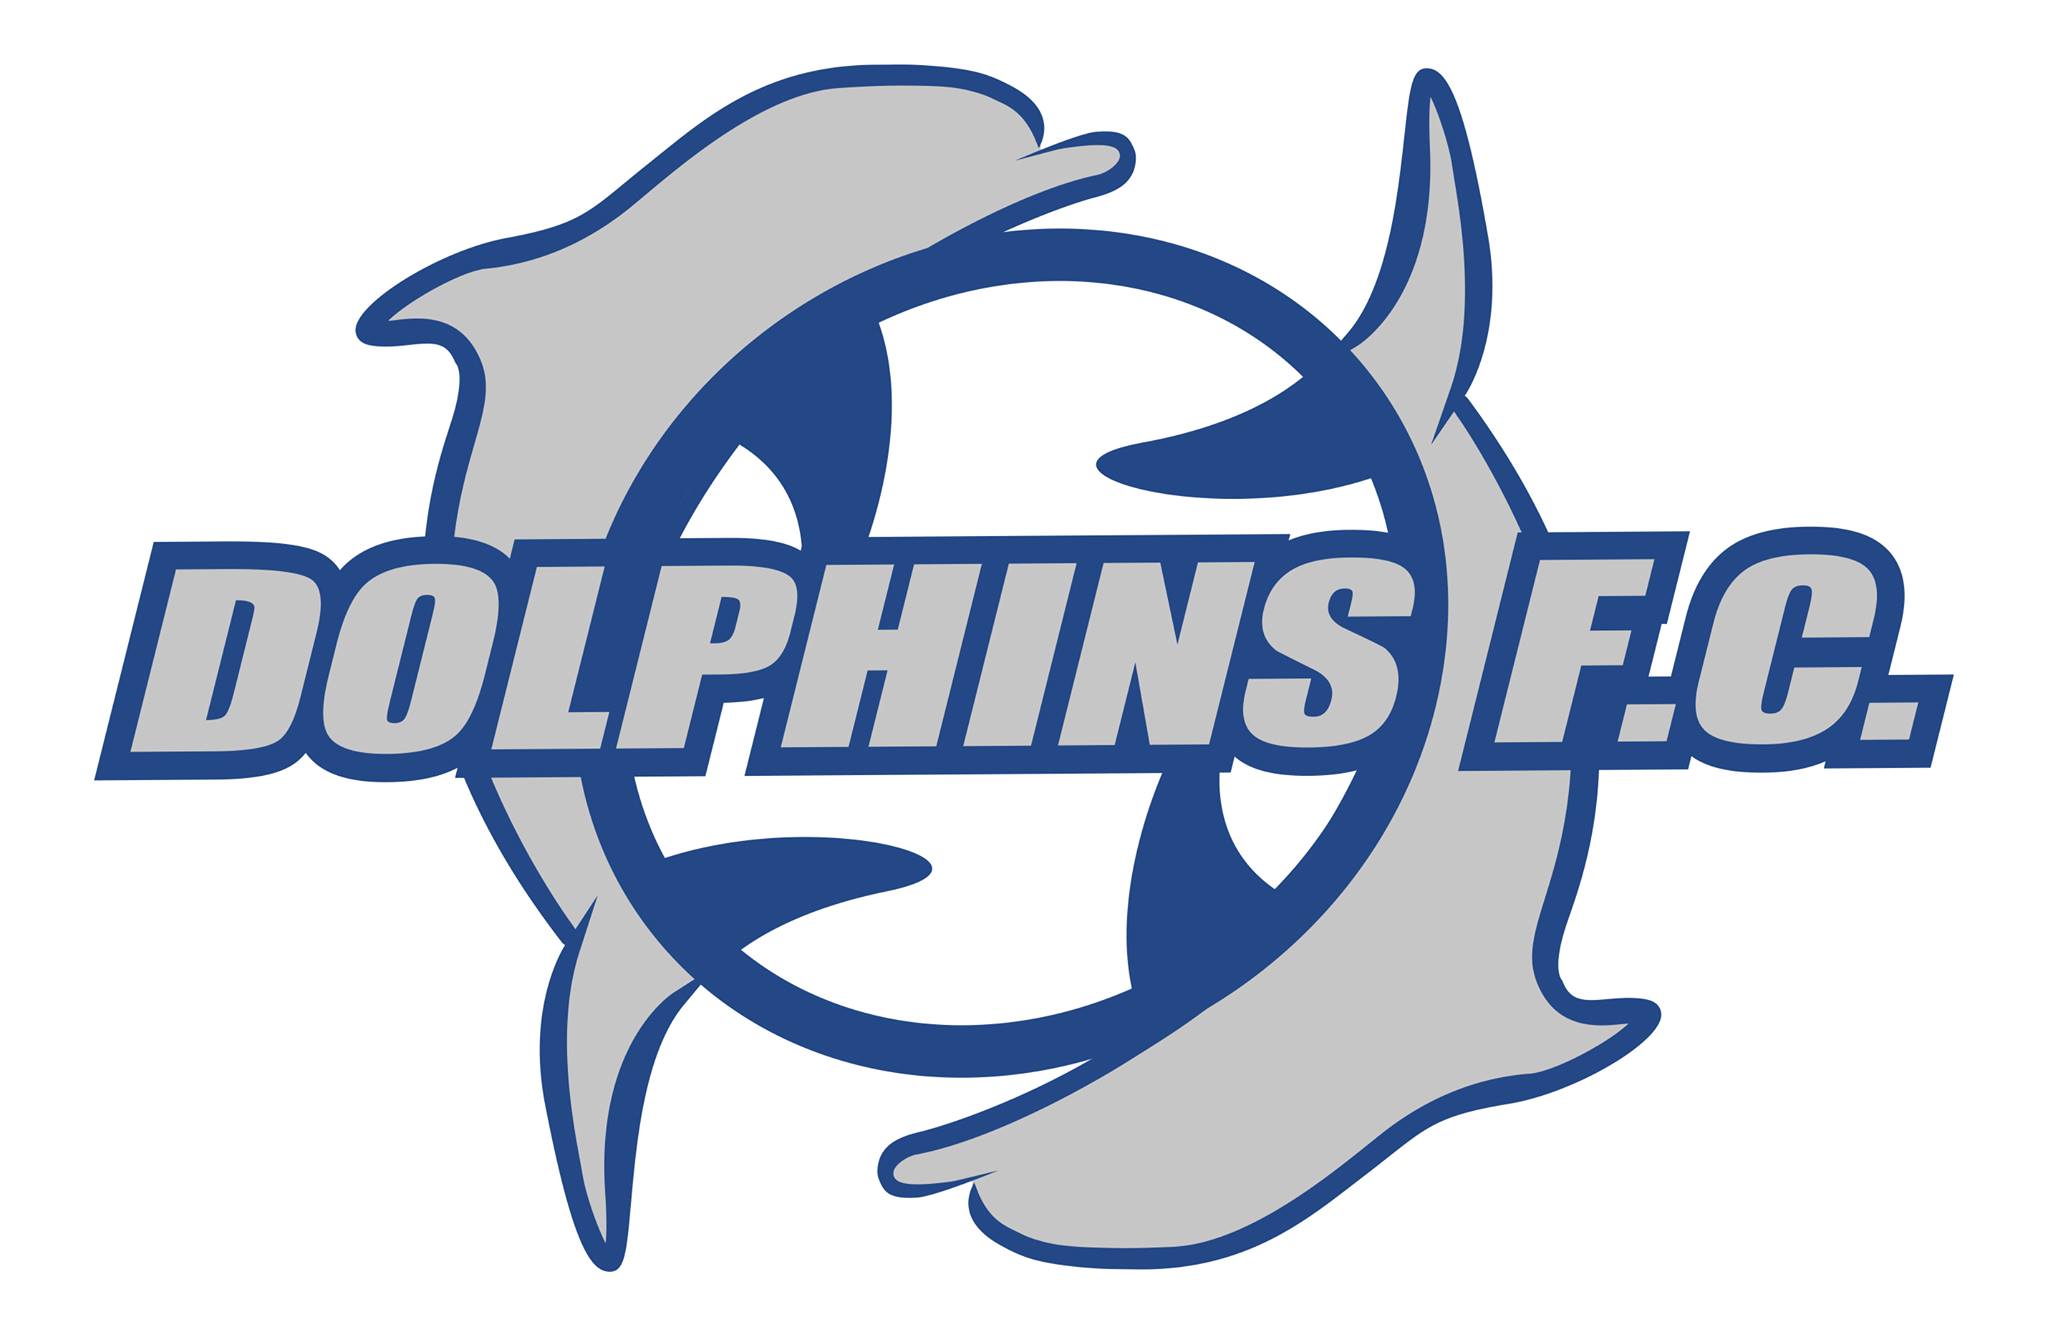 Dolphins-Football-Club